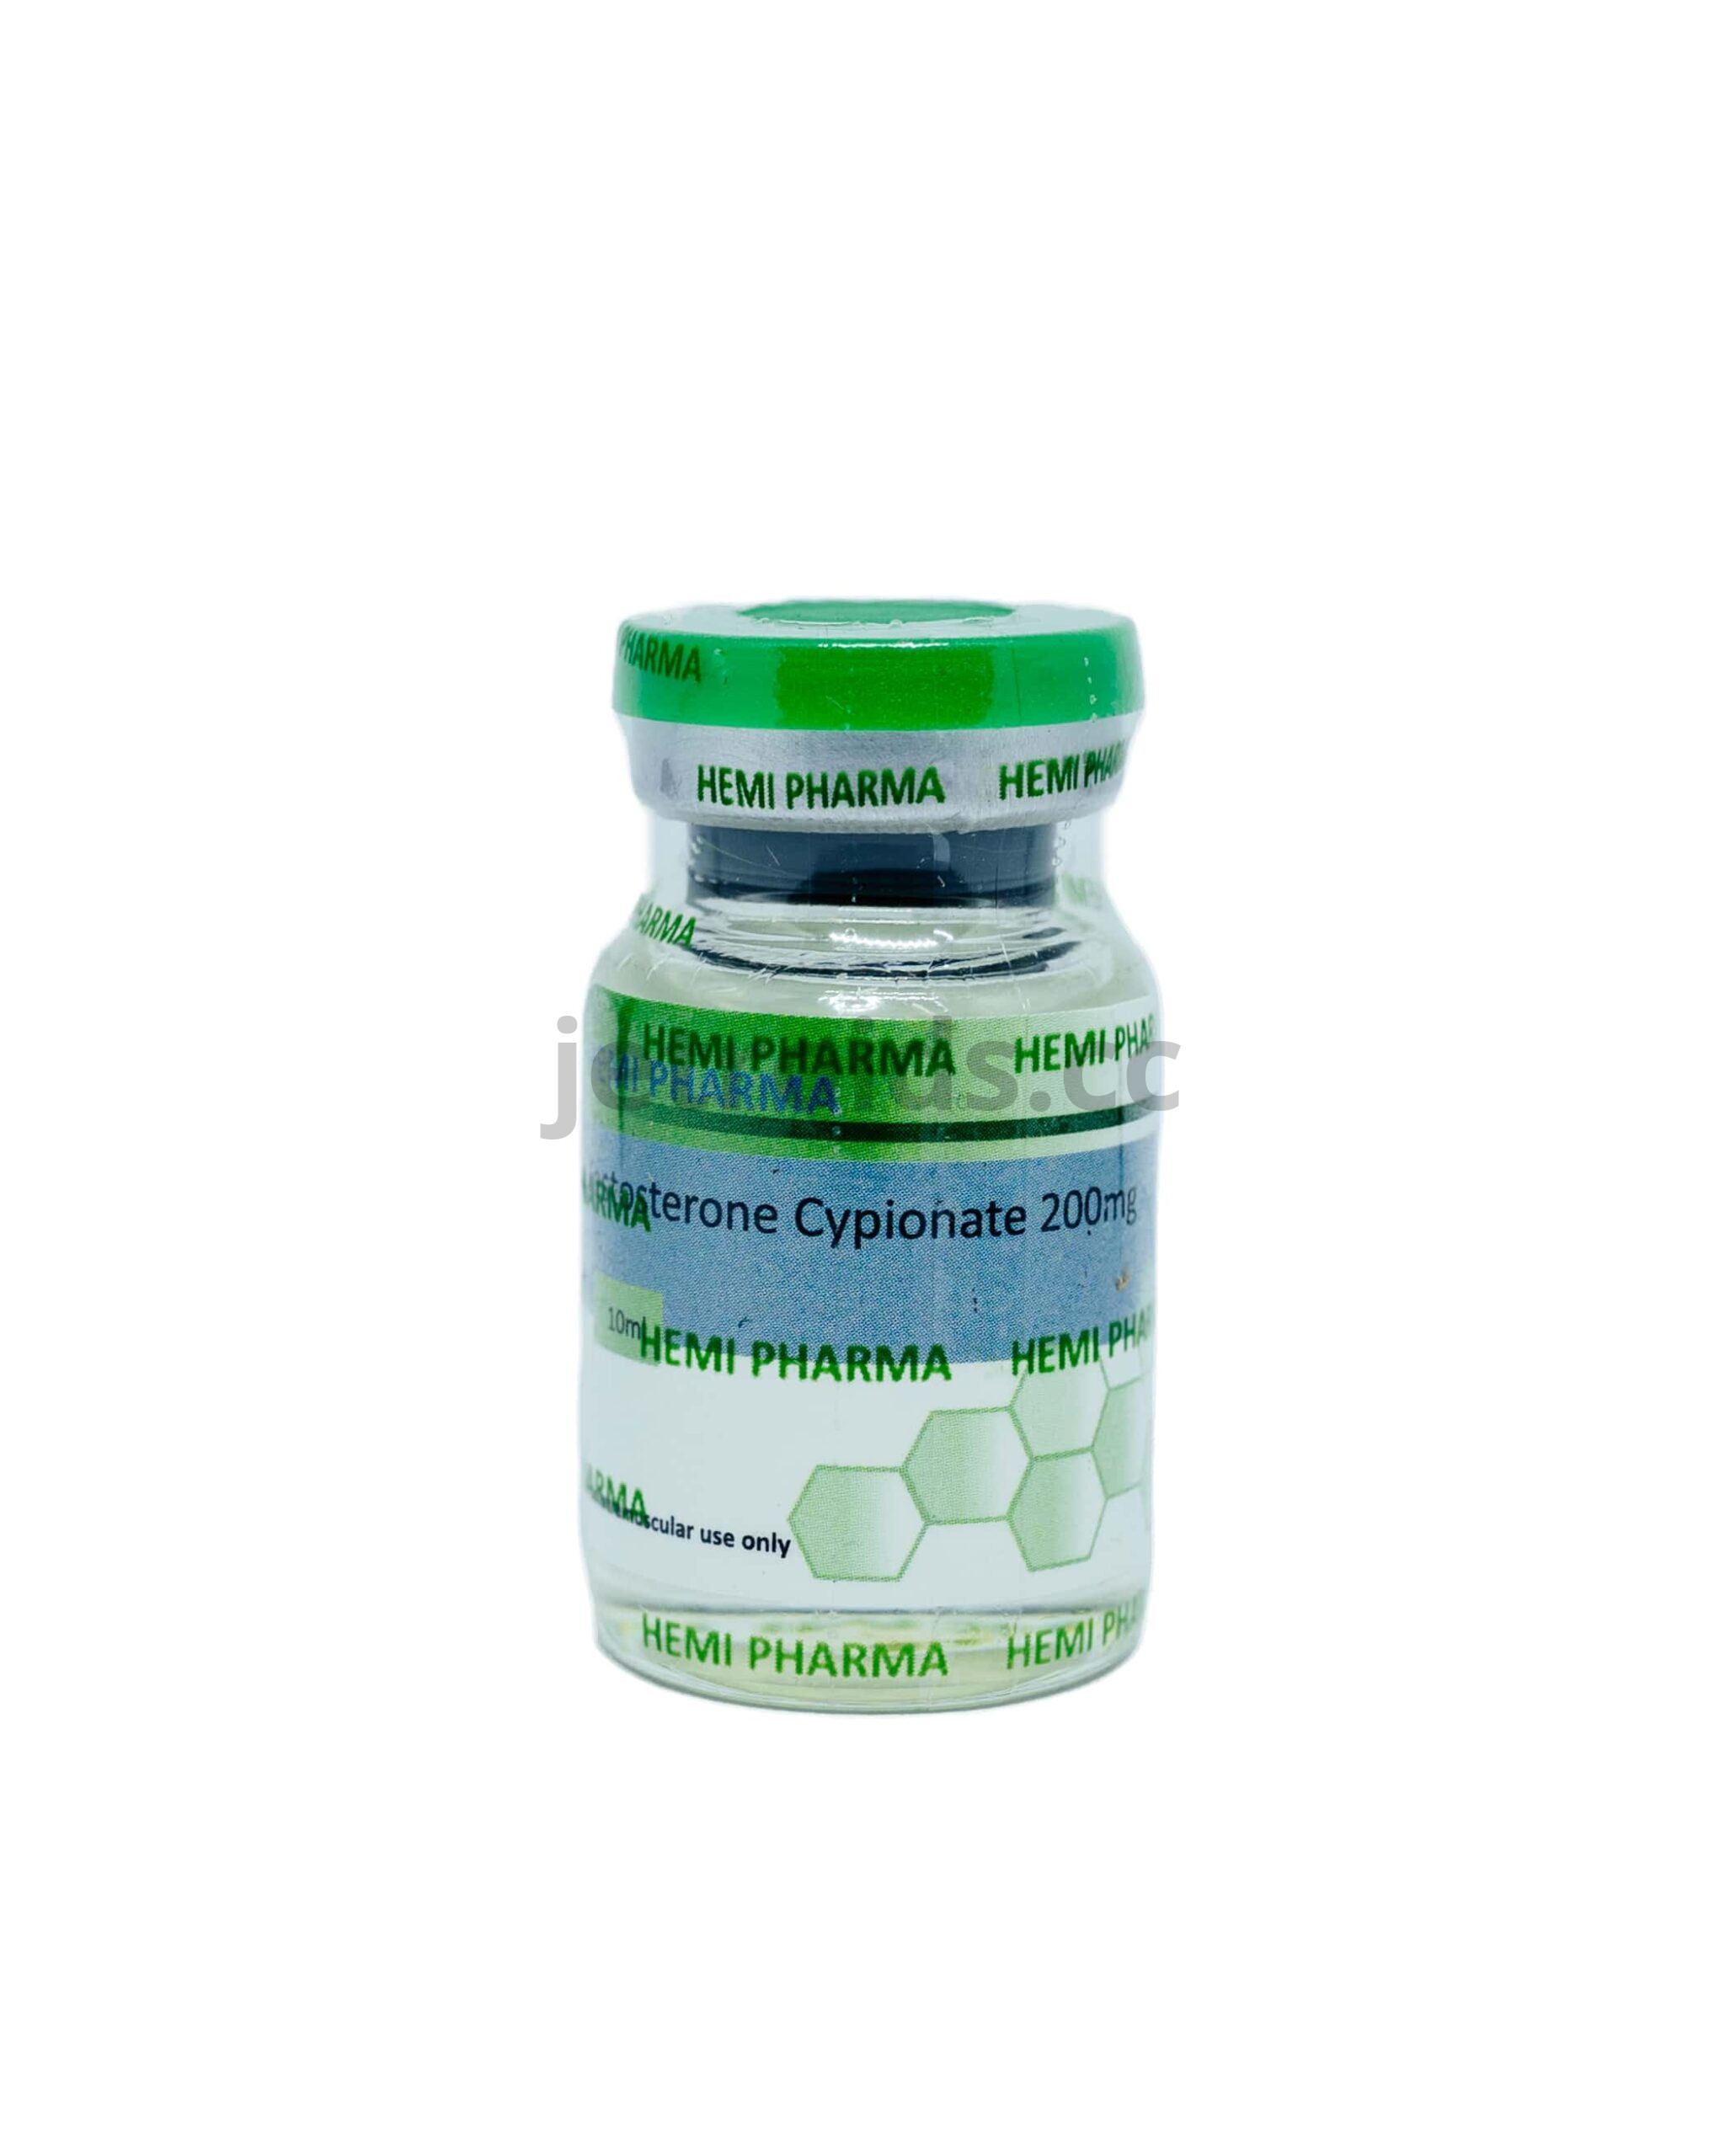 Hemi Pharma Testosterone Cypionate 200 Product Info